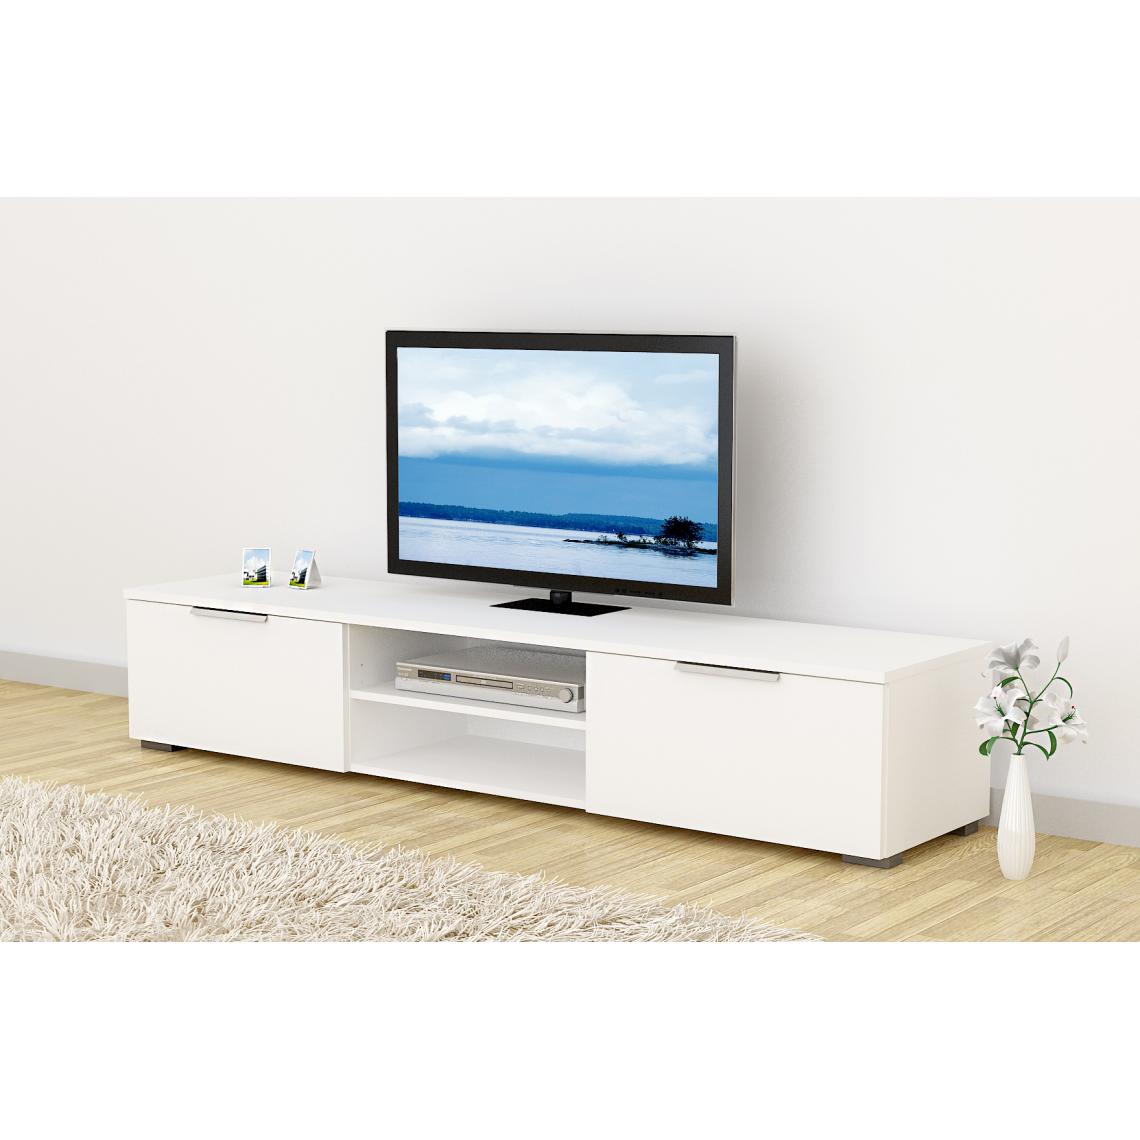 Alter - Meuble TV avec deux tiroirs, blanc brillant, 172 x 33 x 39 cm - Meubles TV, Hi-Fi